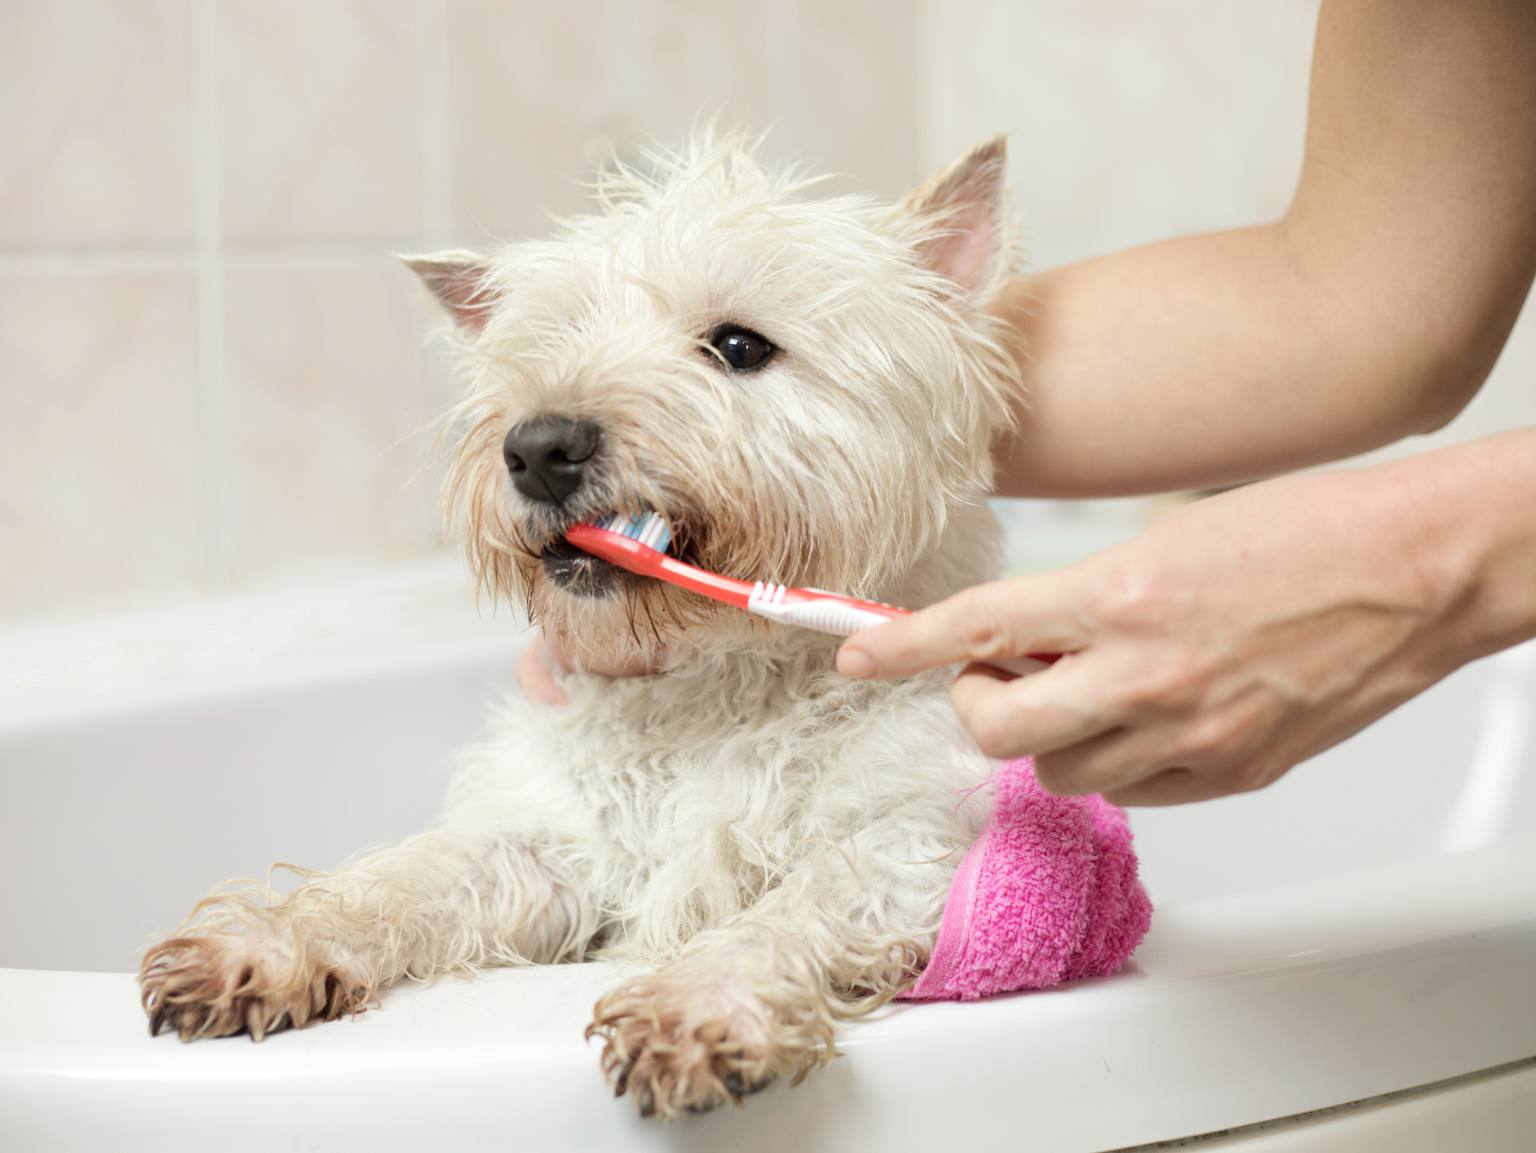 A West Highland Terrier getting its teeth brushed in a bathtub